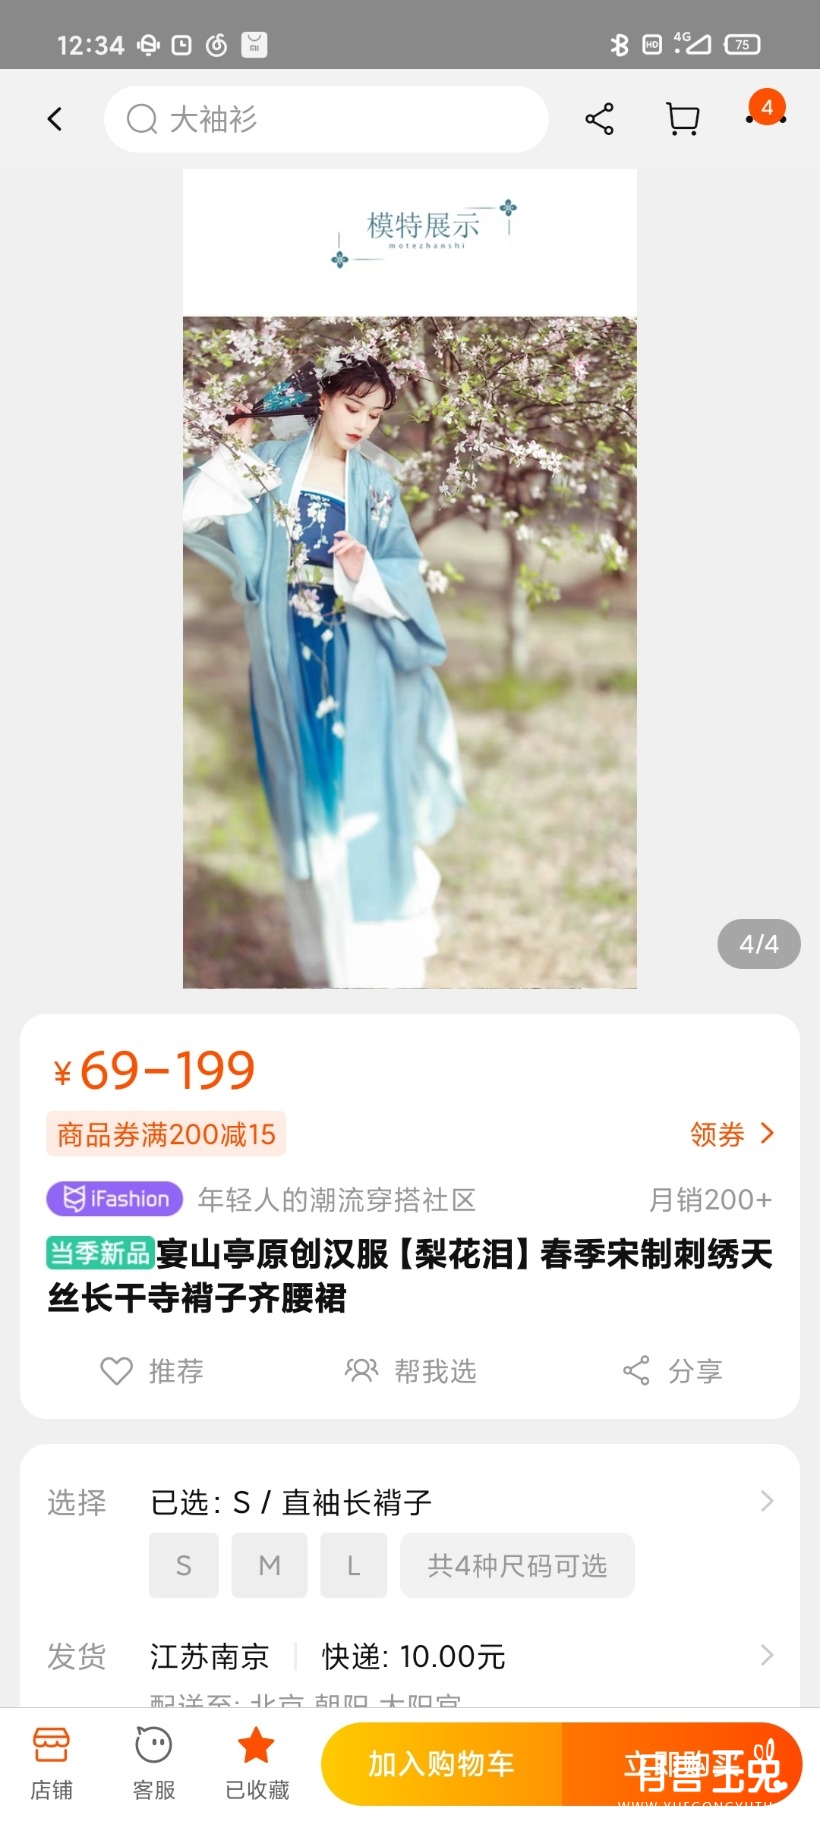 Screenshot_2021-03-31-12-34-10-248_com.taobao.taobao.jpg